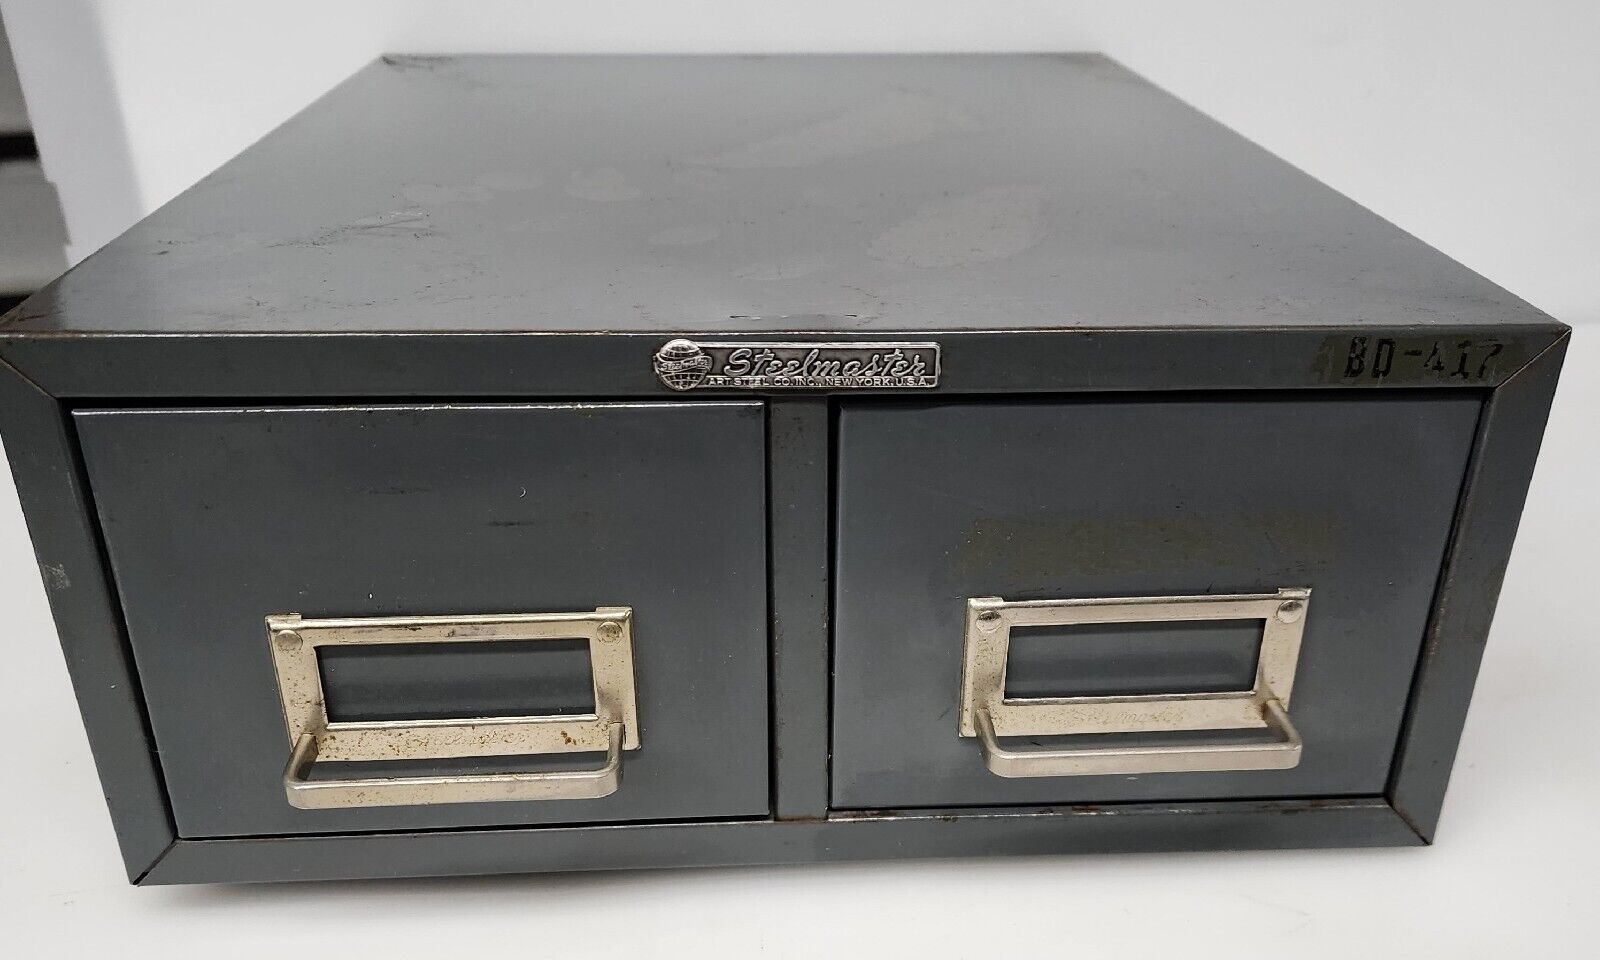 Vintage Steelmaster 2 Drawer File Index Card Cabinet Stackable Storage 4X6 Index